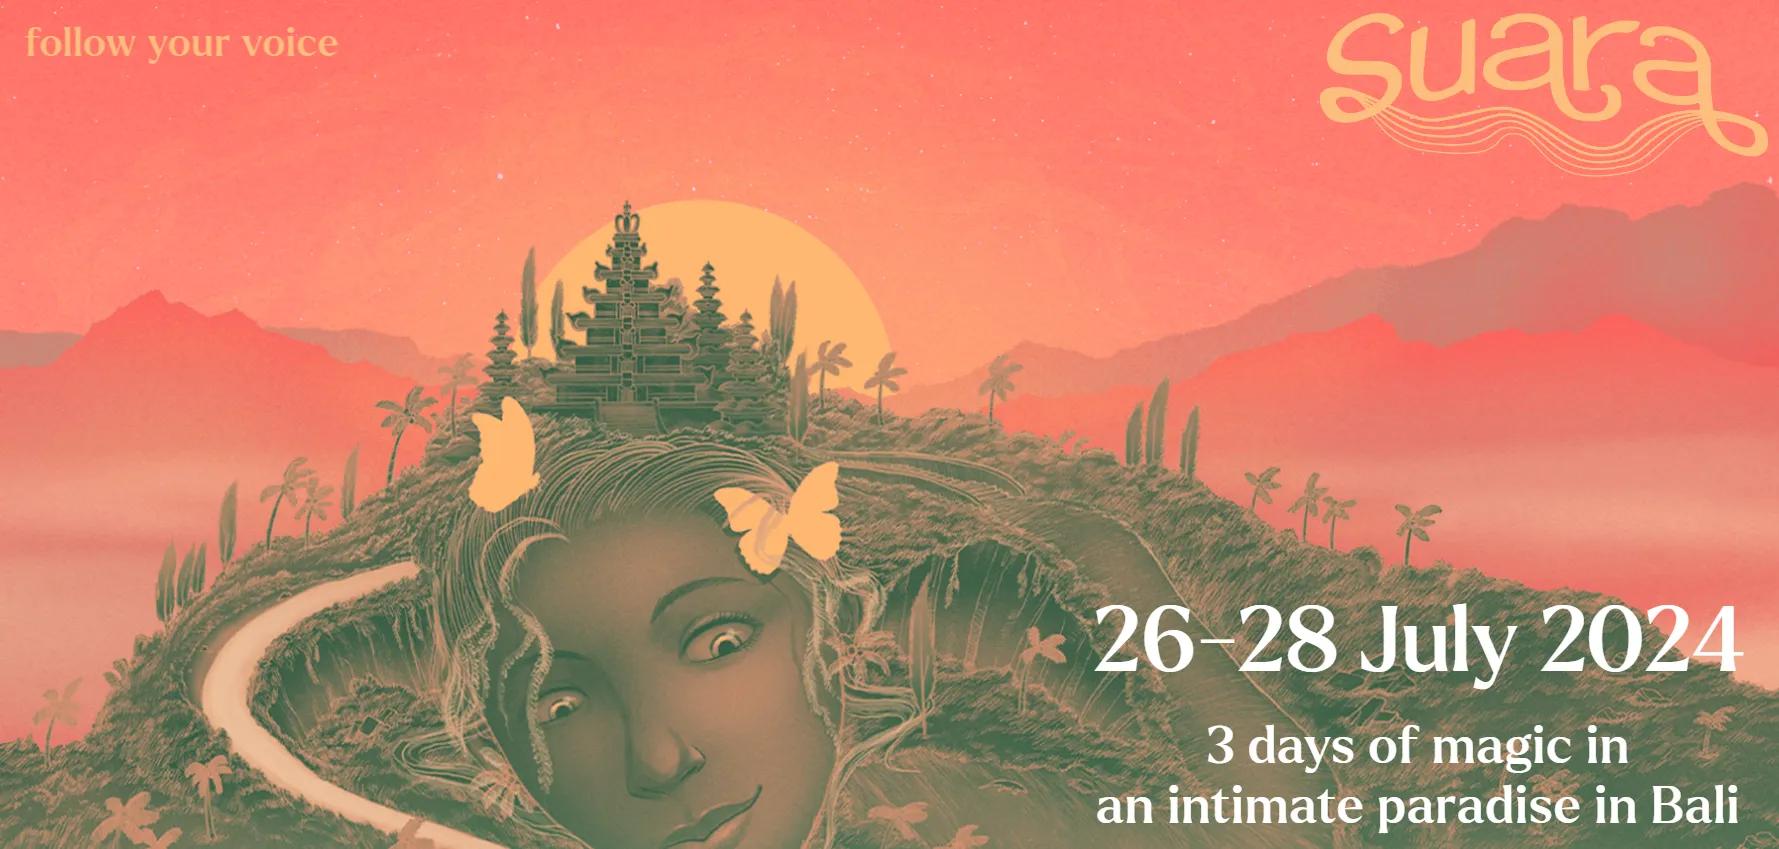 Event at Nuanu Gate everyday in 2024: Suara Festival